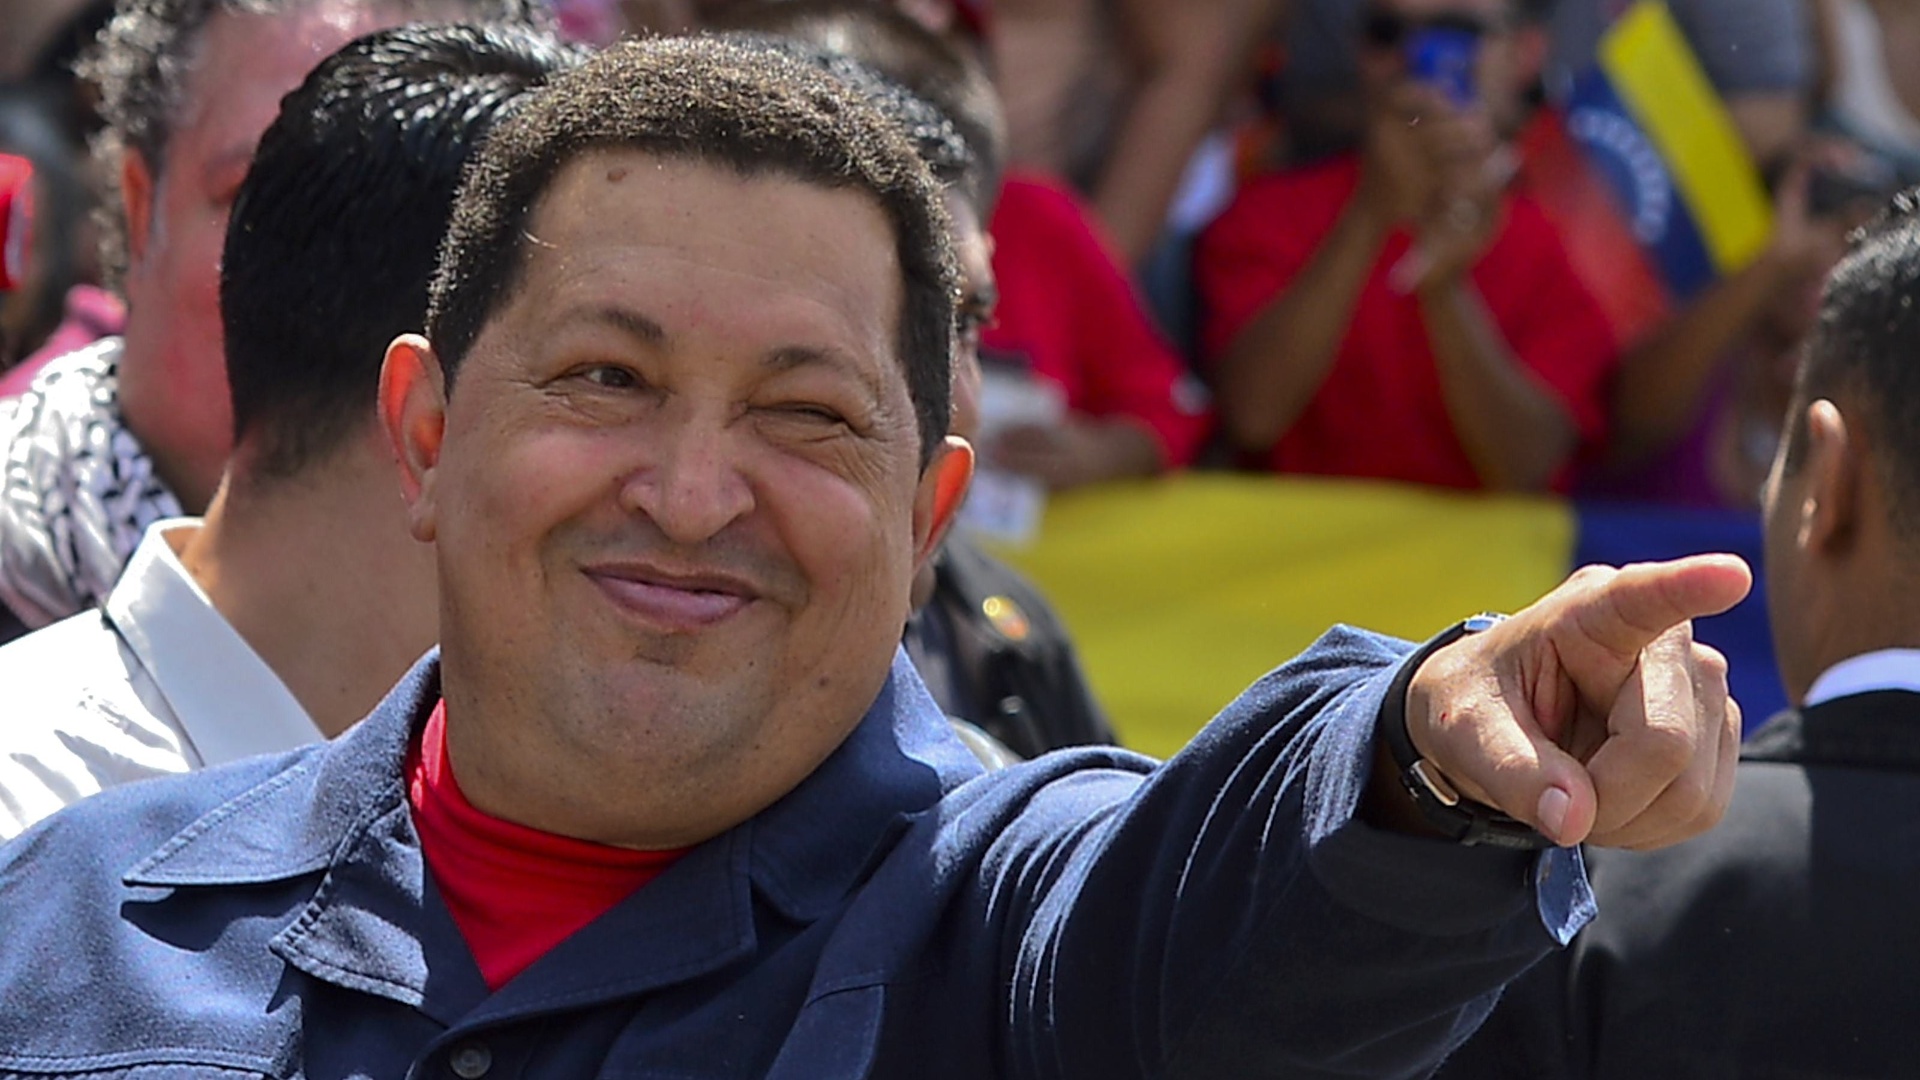 ... conferences and film showings, Cuba is participating in the month-long tribute to former Venezuelan President Hugo Chávez entitled Por aquí pasó Chávez ...